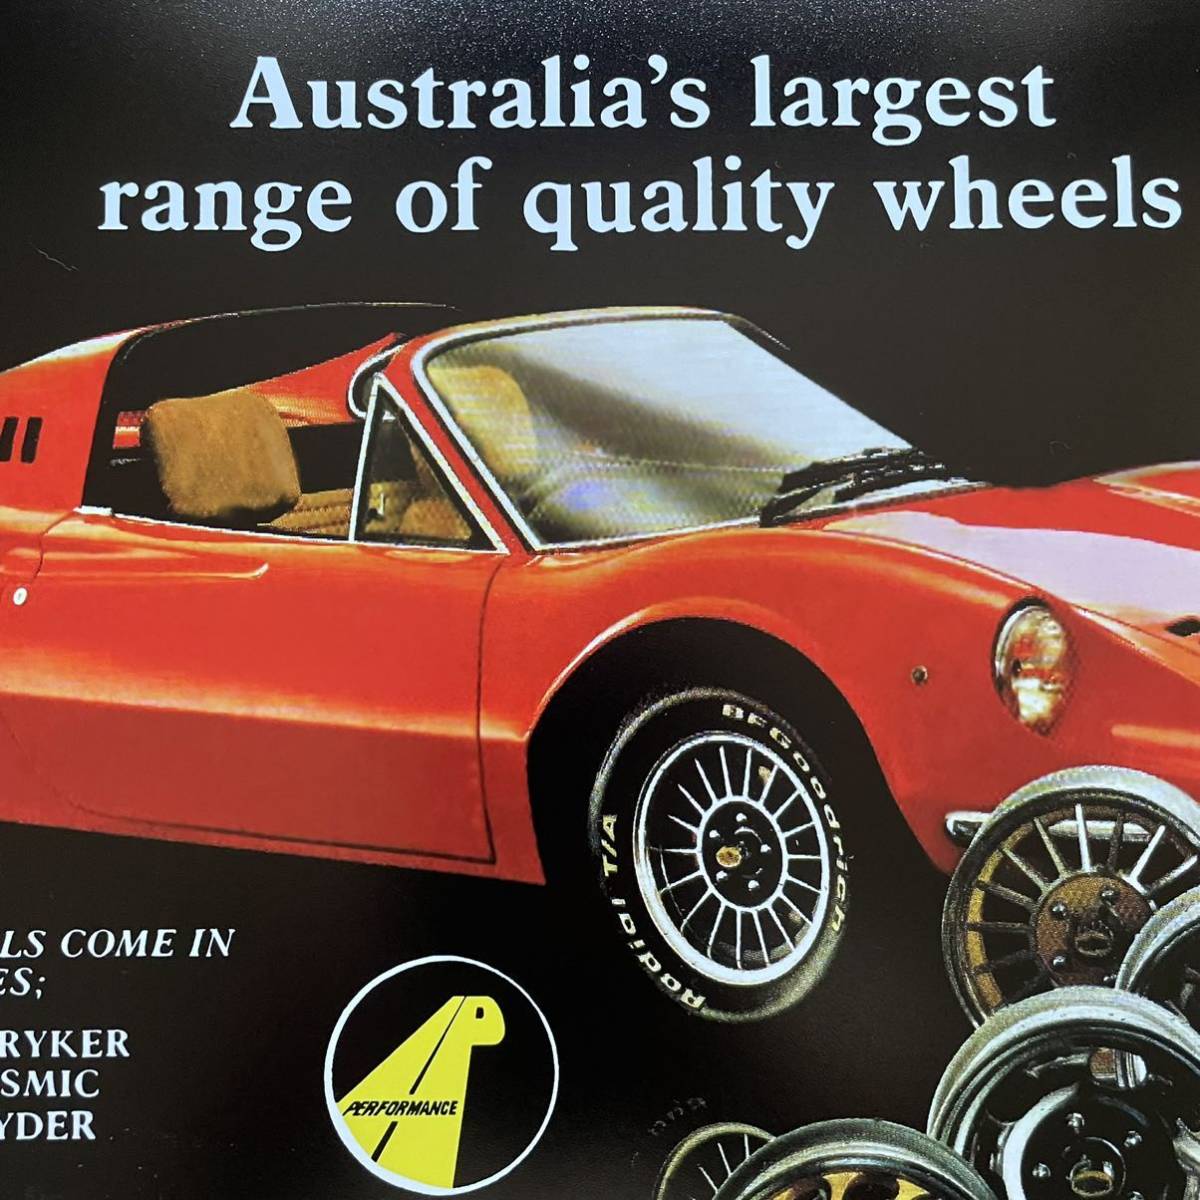 *Ferrari Dino 246 GTS Австралия версия Performance * колесо фирма реклама постер * Ferrari *tino